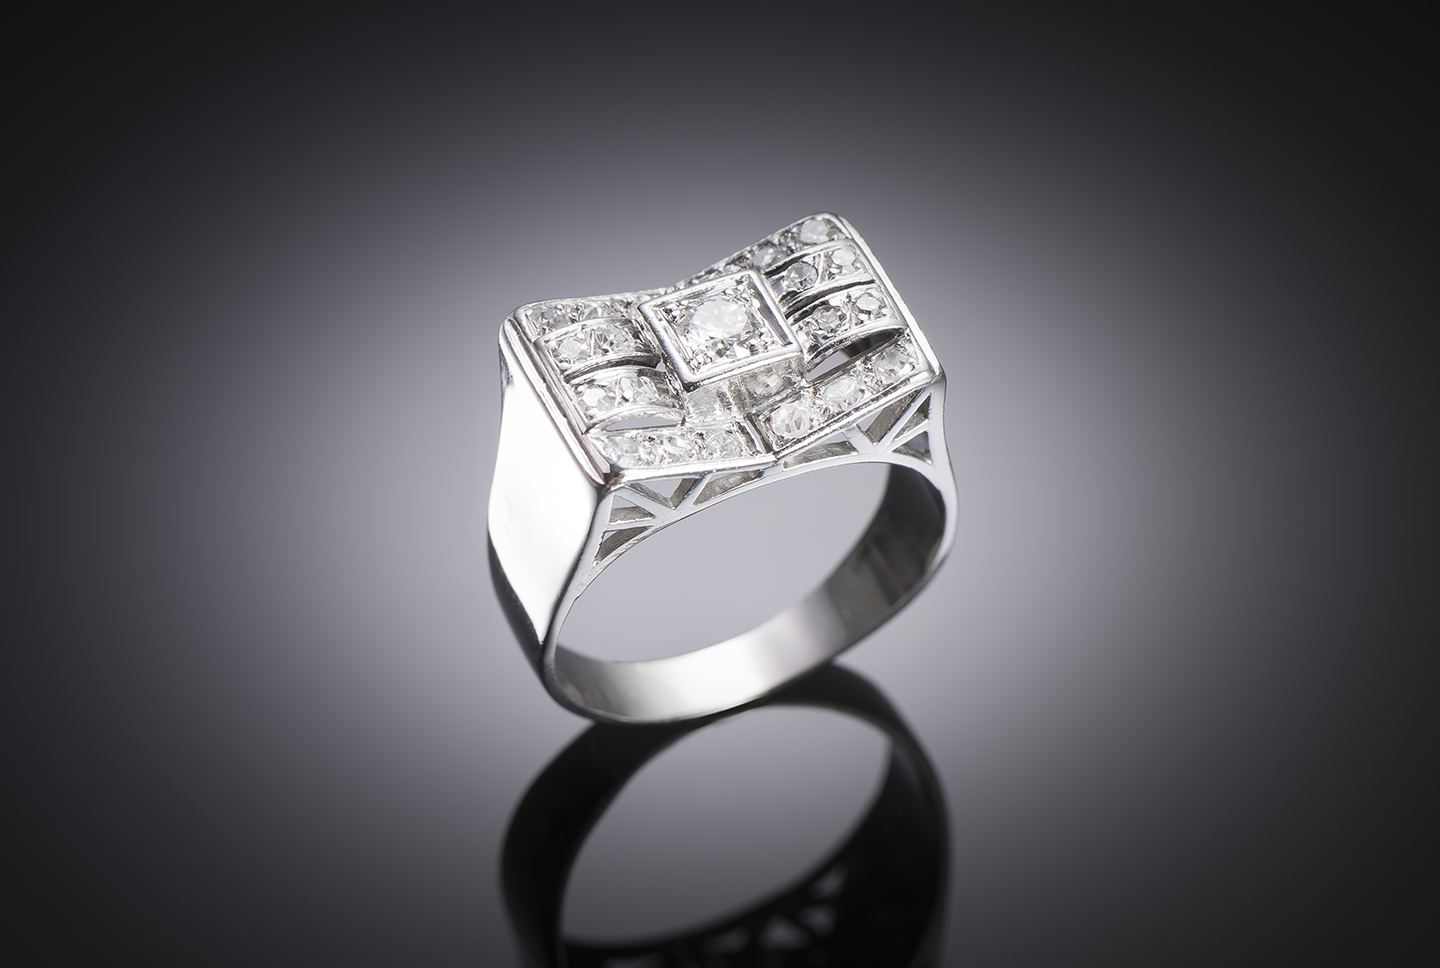 Modernist diamond ring (1 carat). French work circa 1935.-1